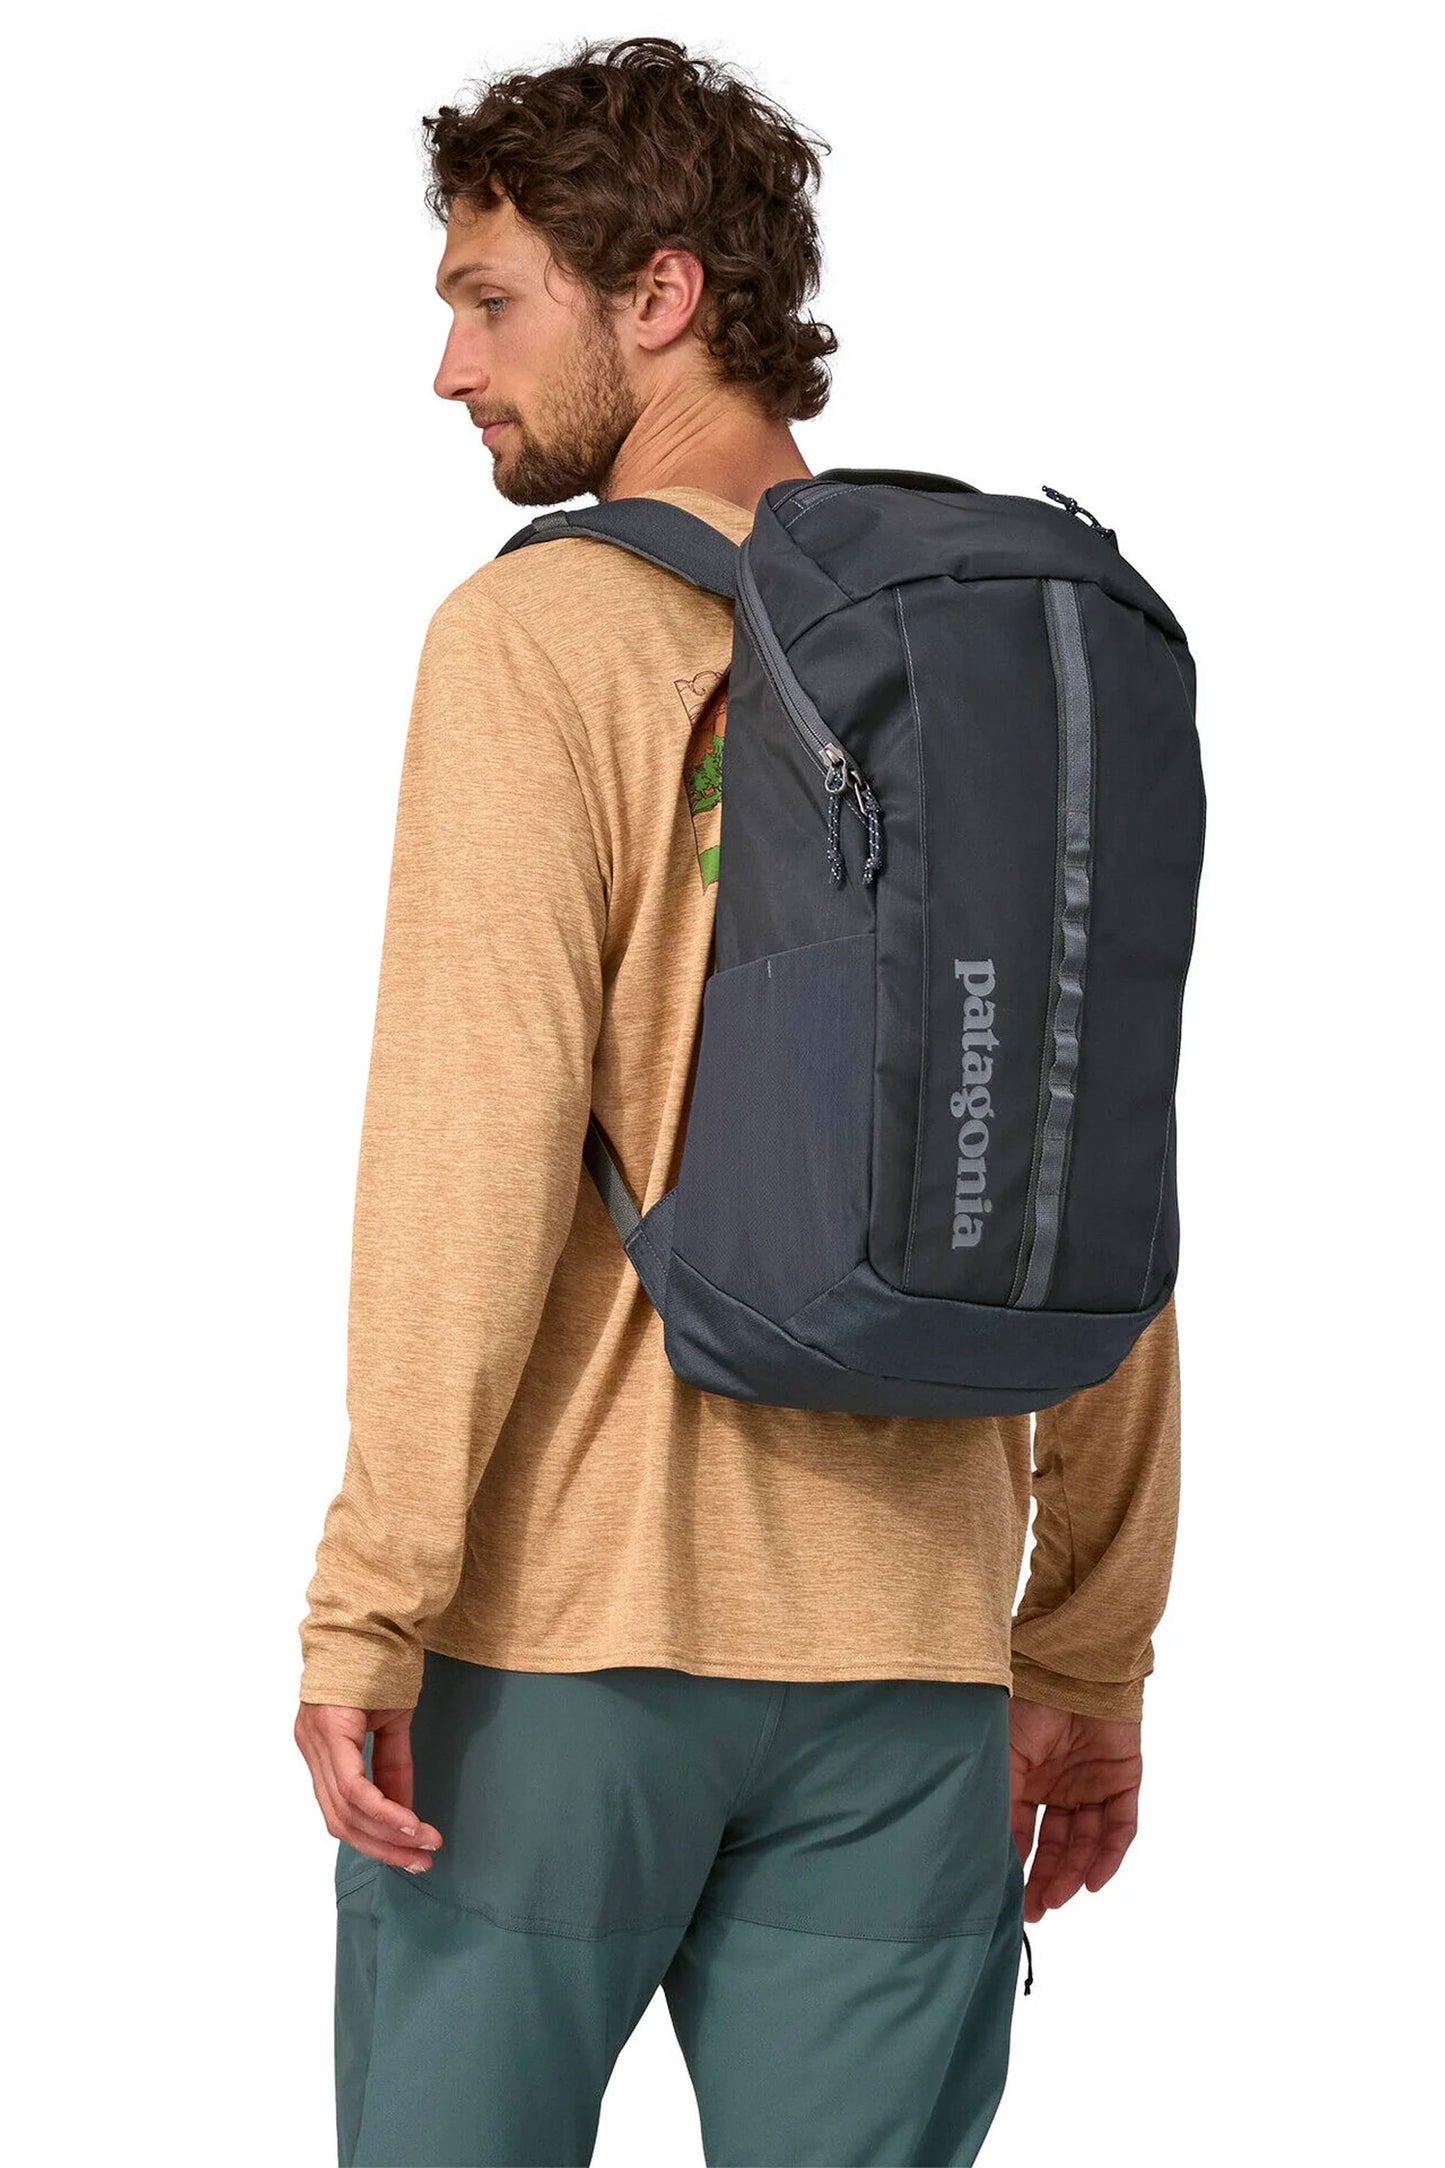 Pukas-Surf-Shop-patagonia-black-hole-duffel-25l-smdb-backpack